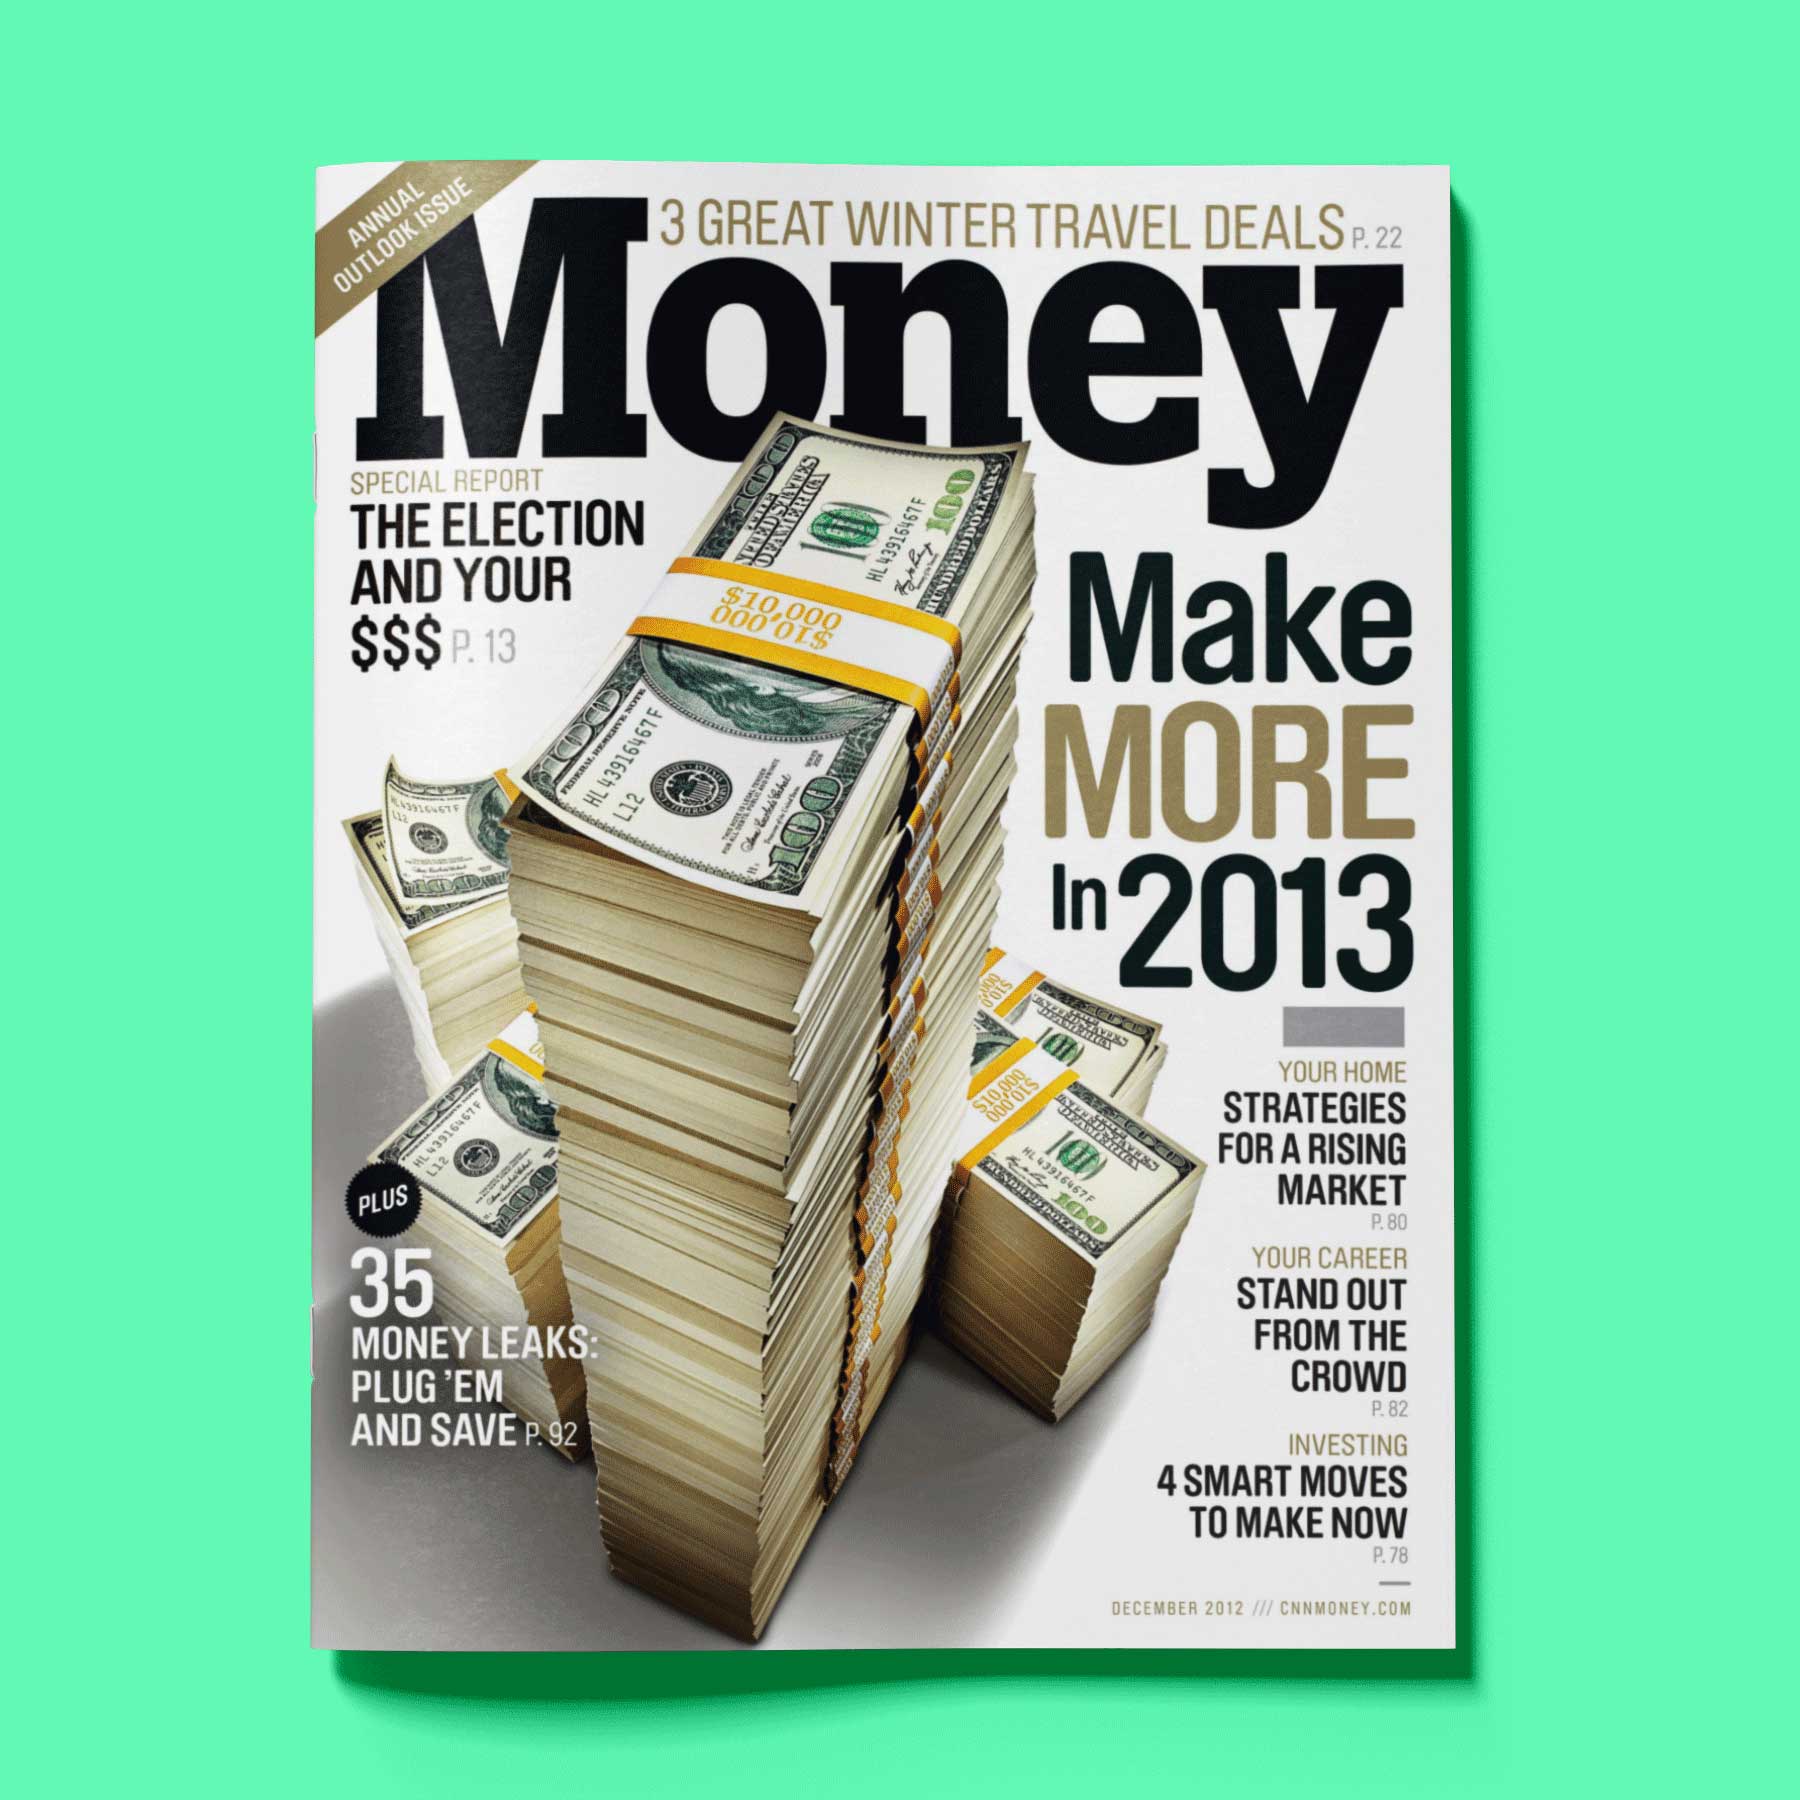 moneycover_makemore2013.jpg